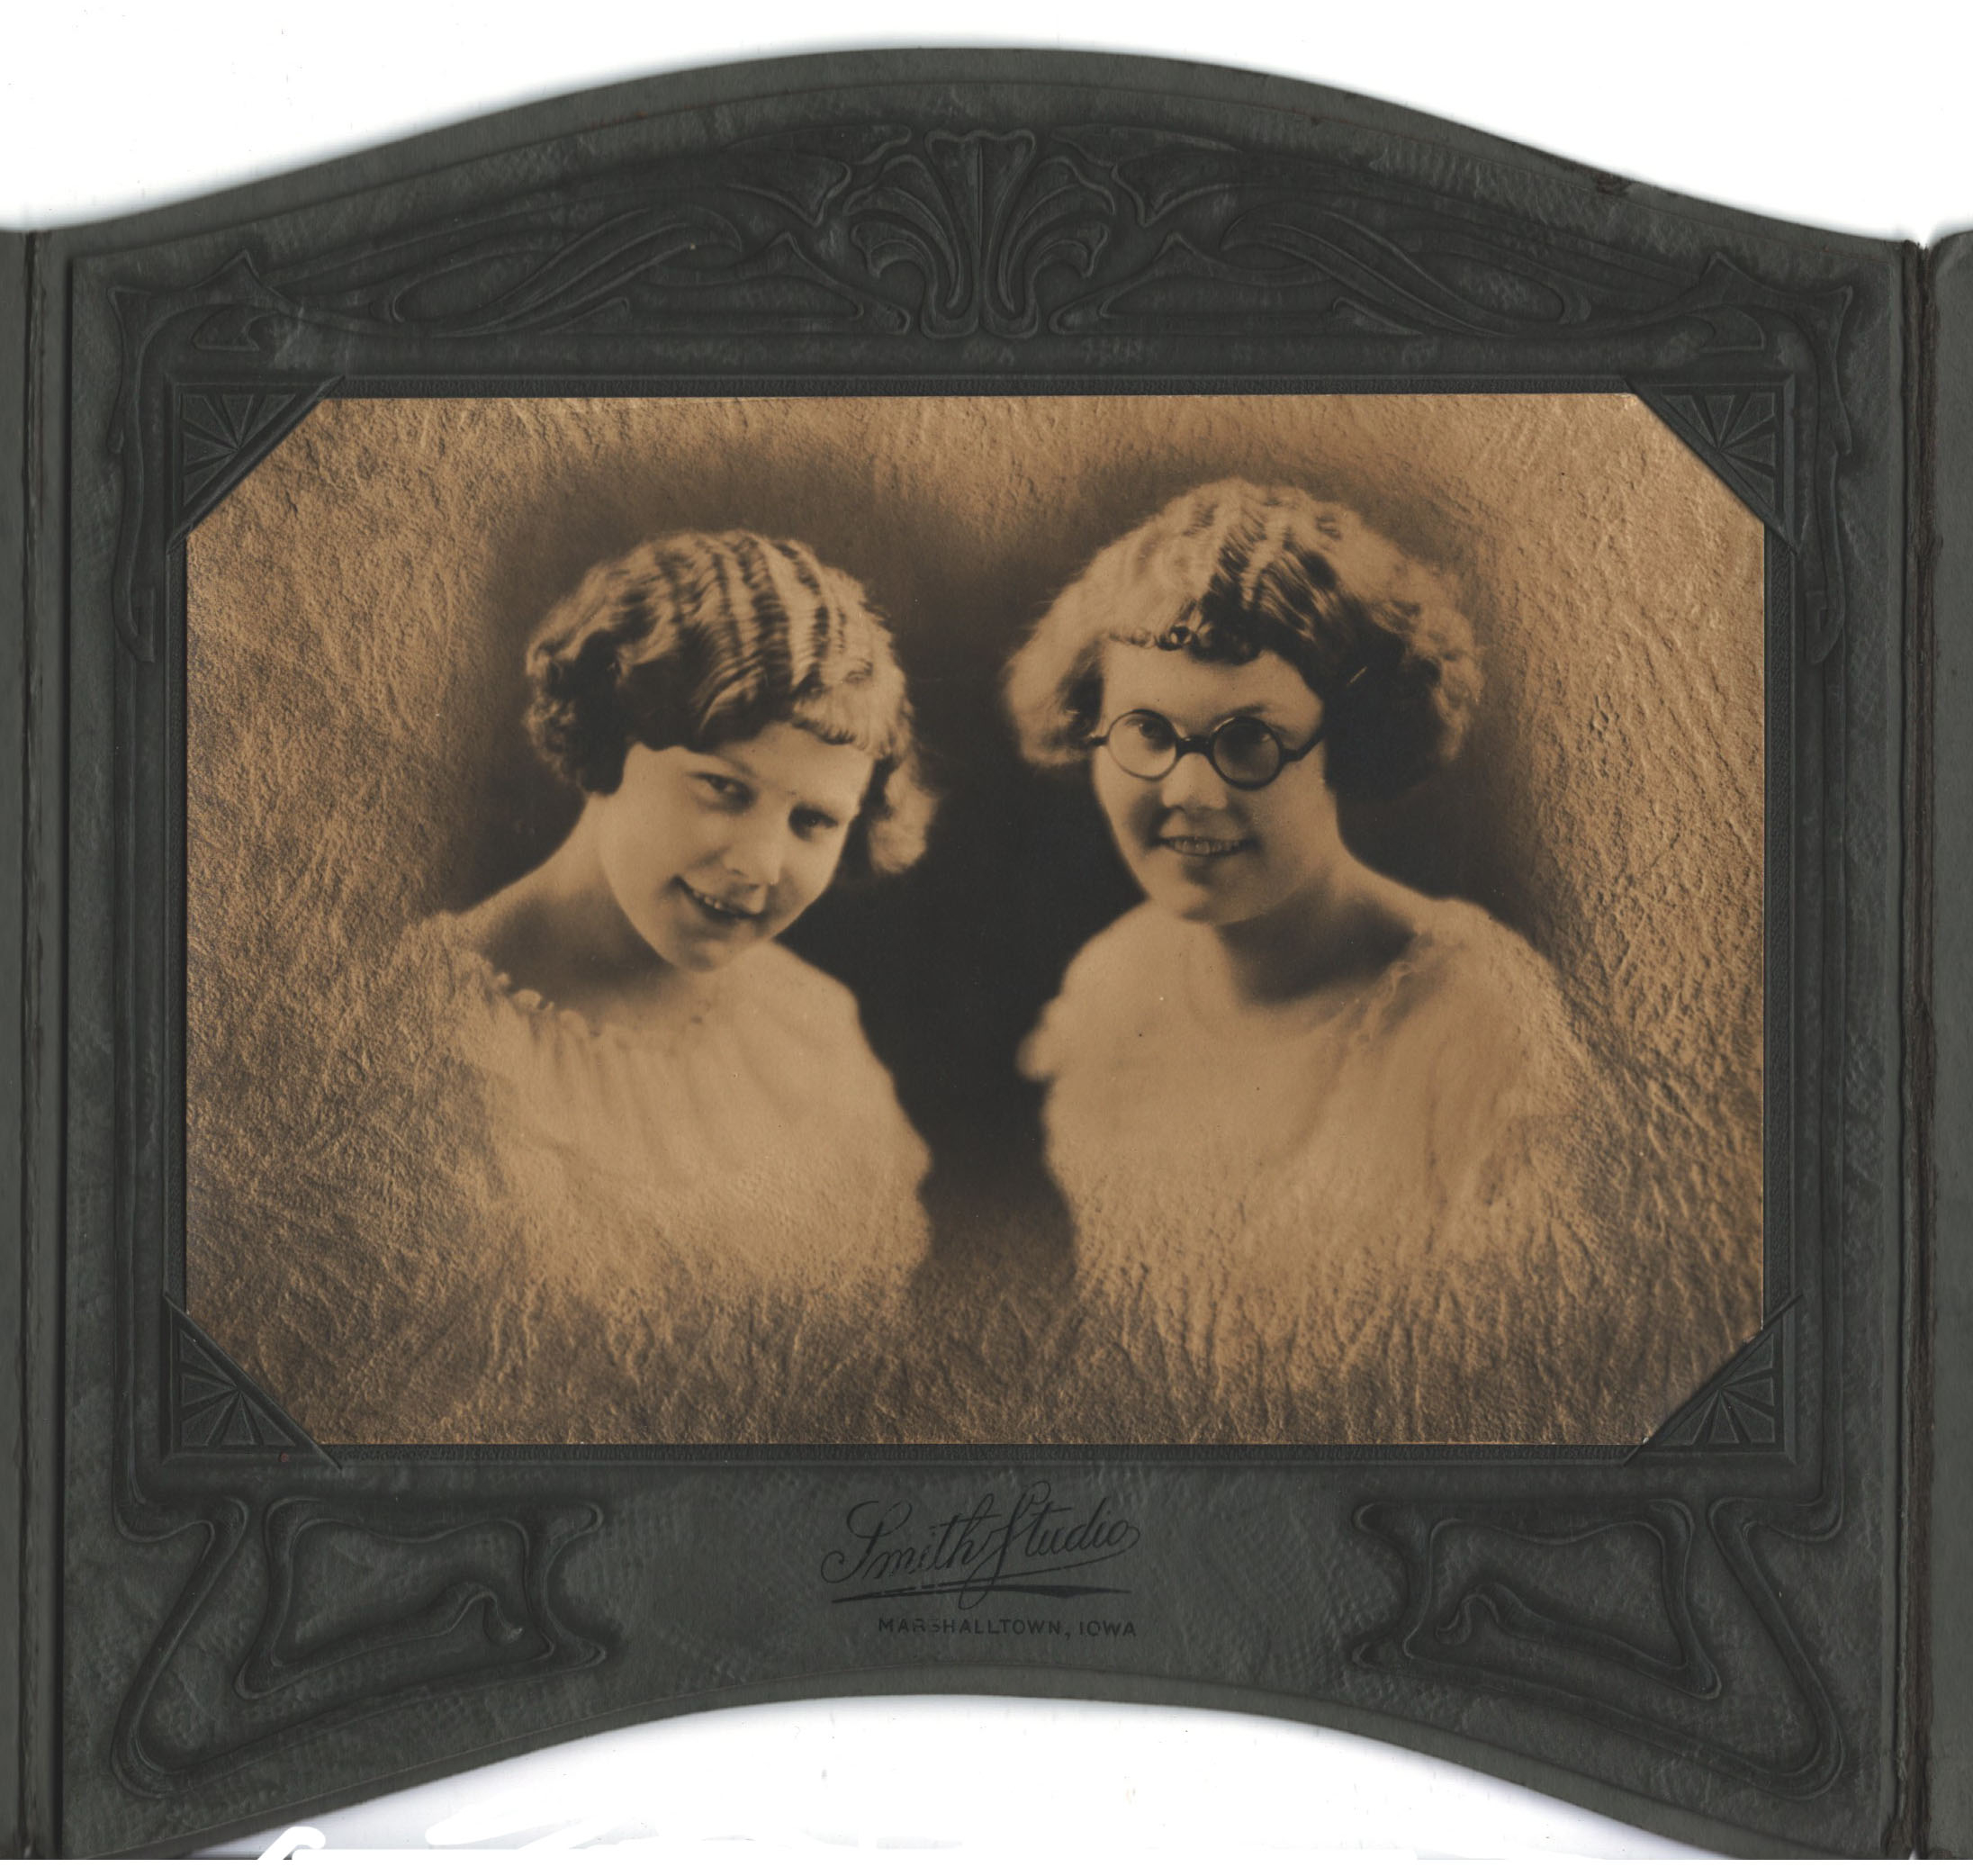 Alice and Gladys Twedt